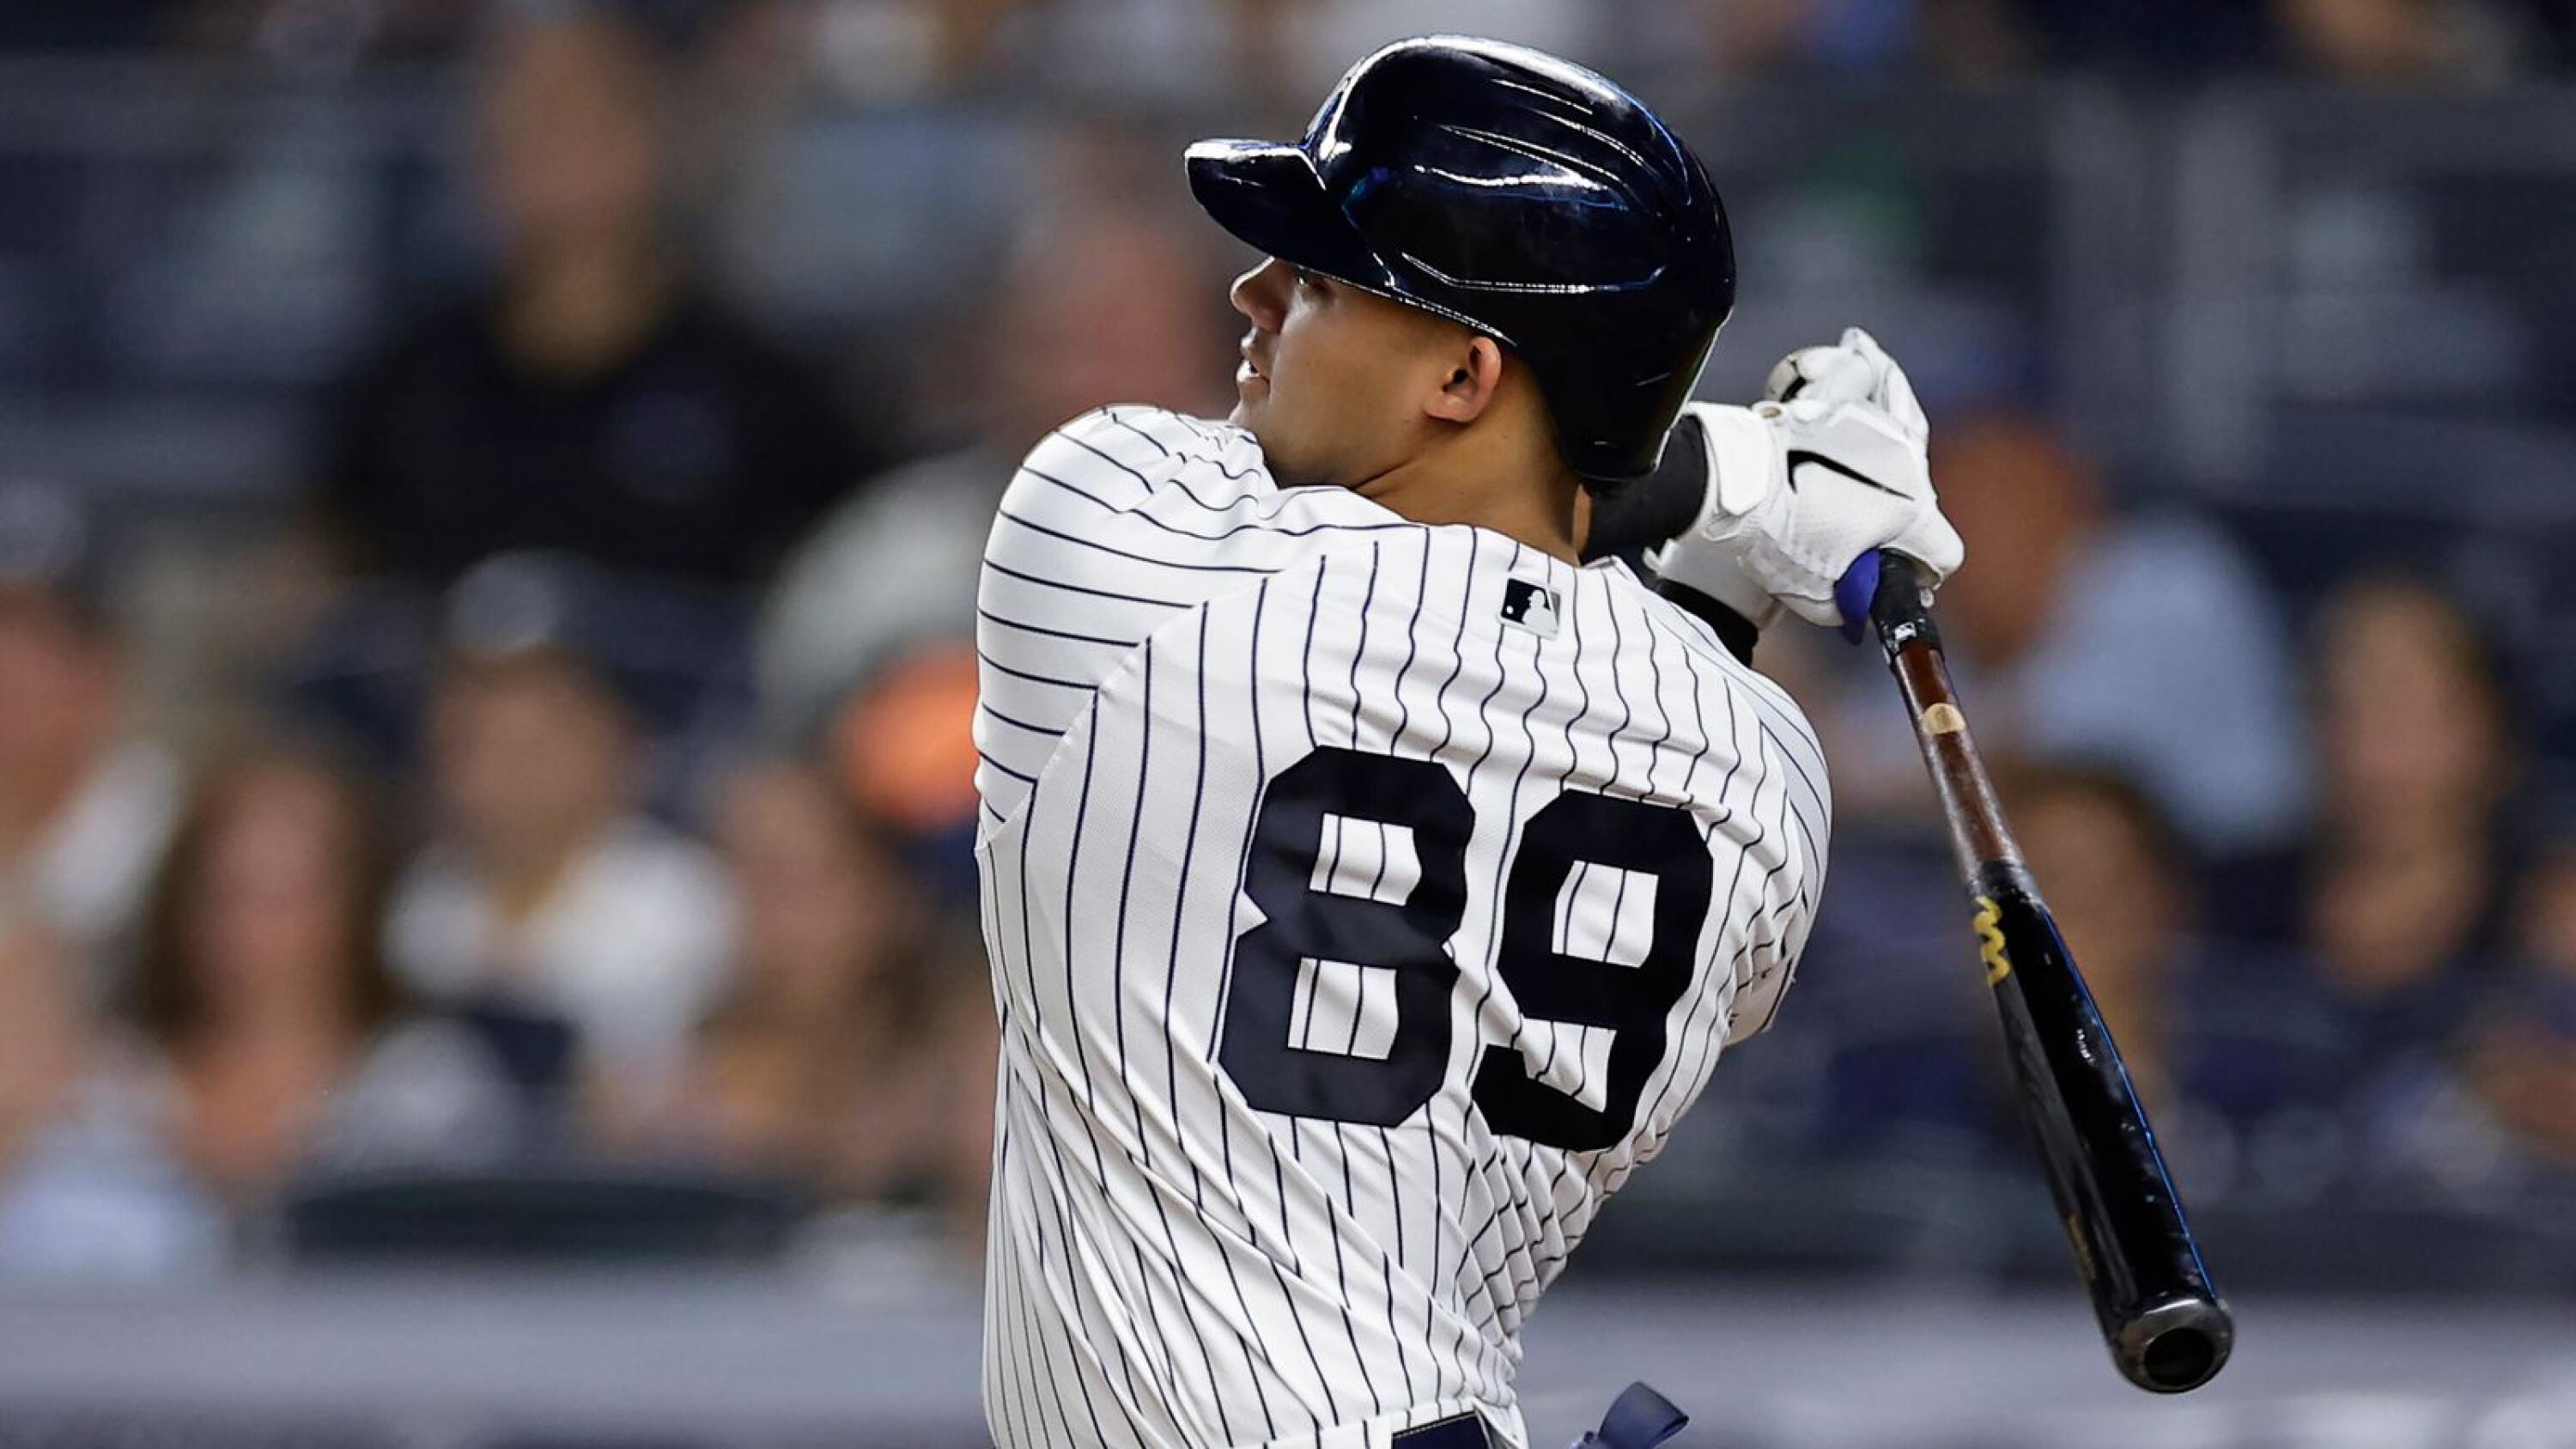 Fan throws back home run ball at Yankee Stadium, hits Yankees